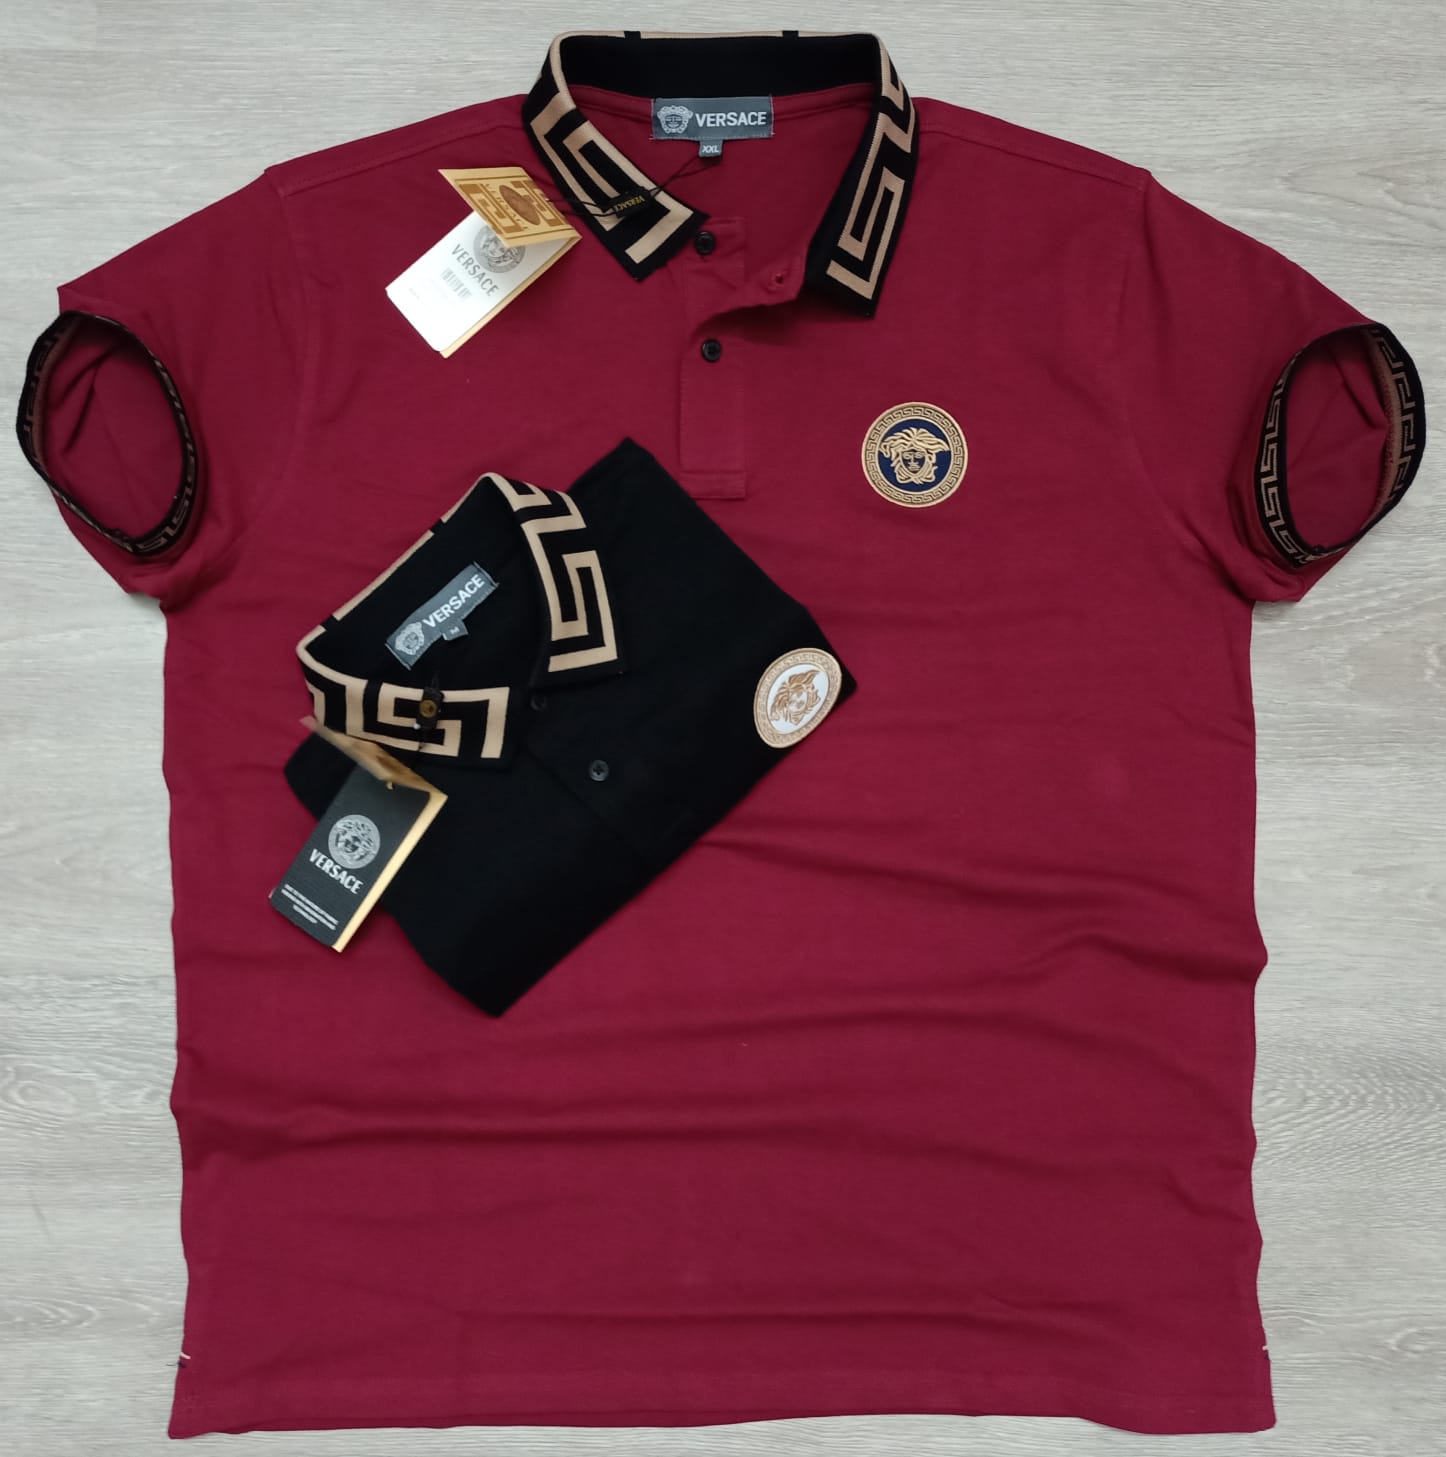 Imported Super Premium Cotton Polo Shirt For Men - ZPL02 - Maroon